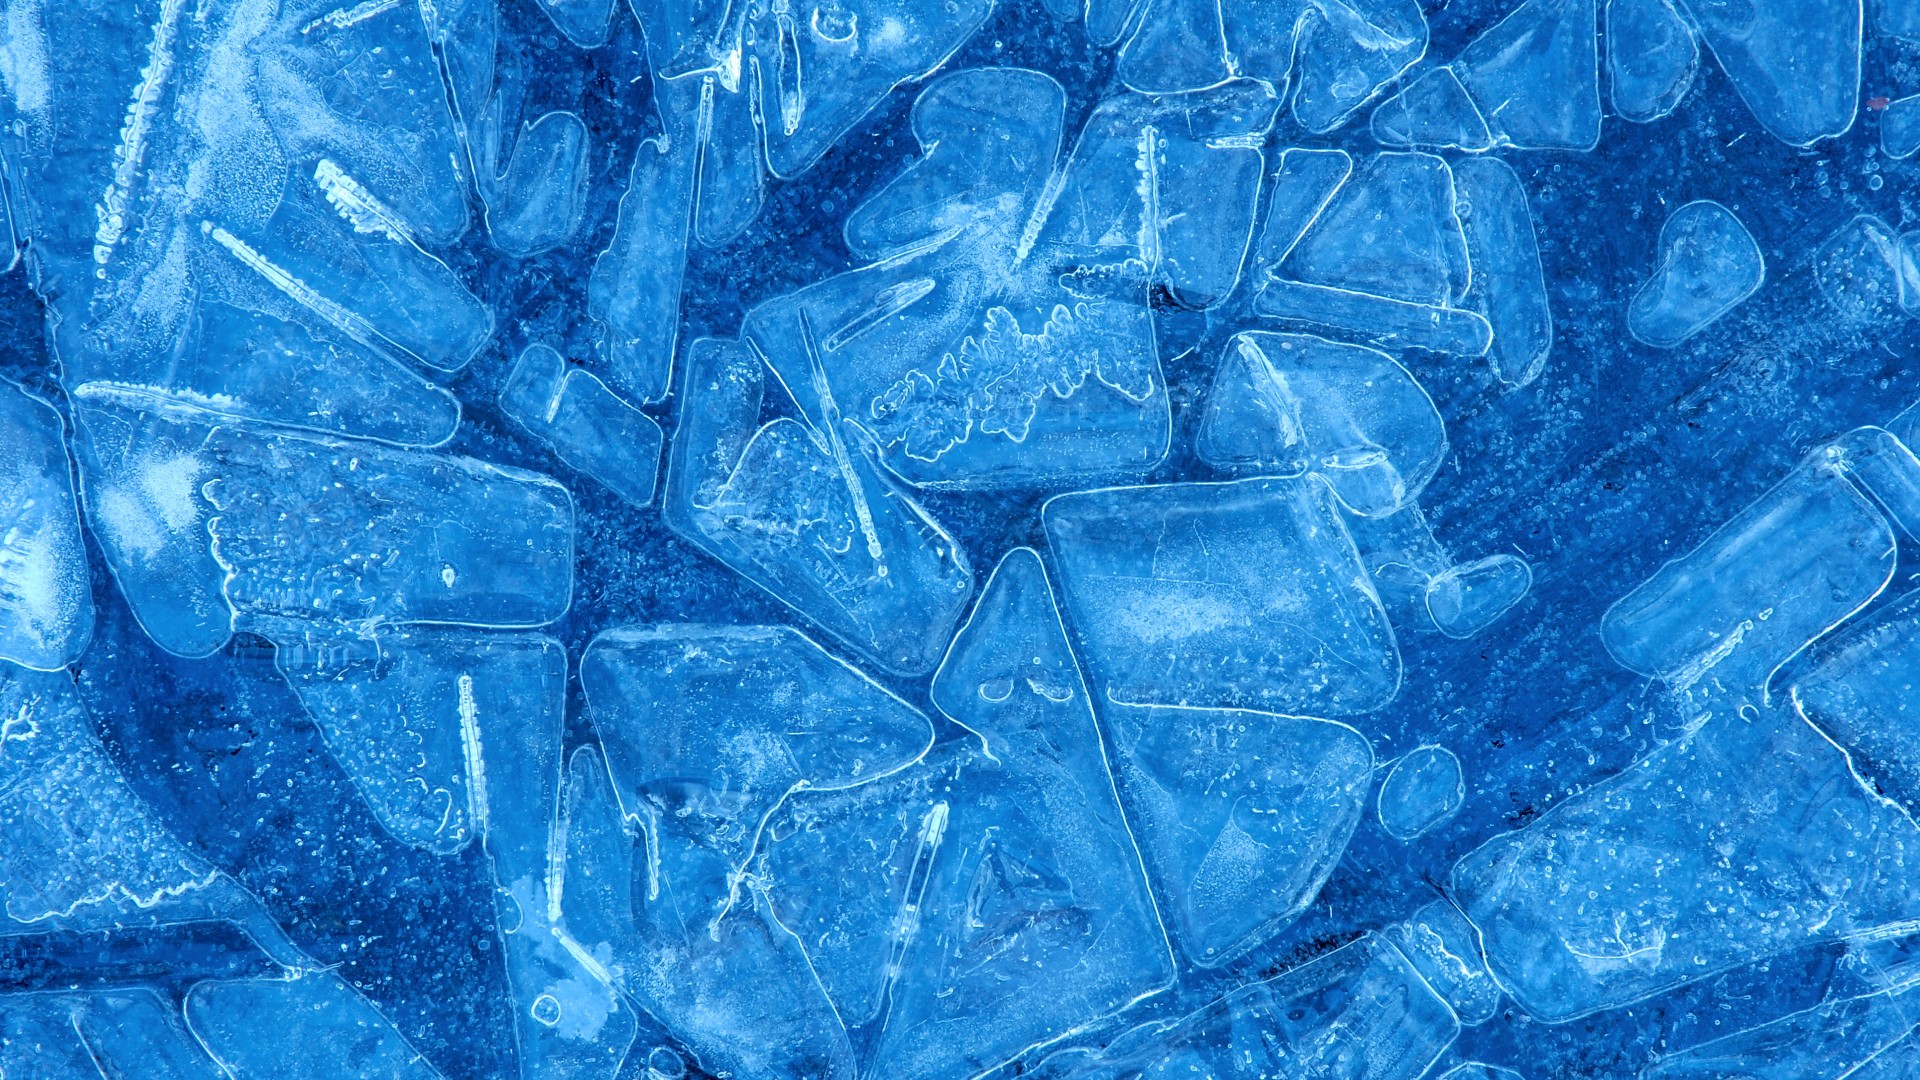 лед, 4k, 5k, фон, голубой, ice, 4k, 5k wallpaper, pattern, blue, background (horizontal)